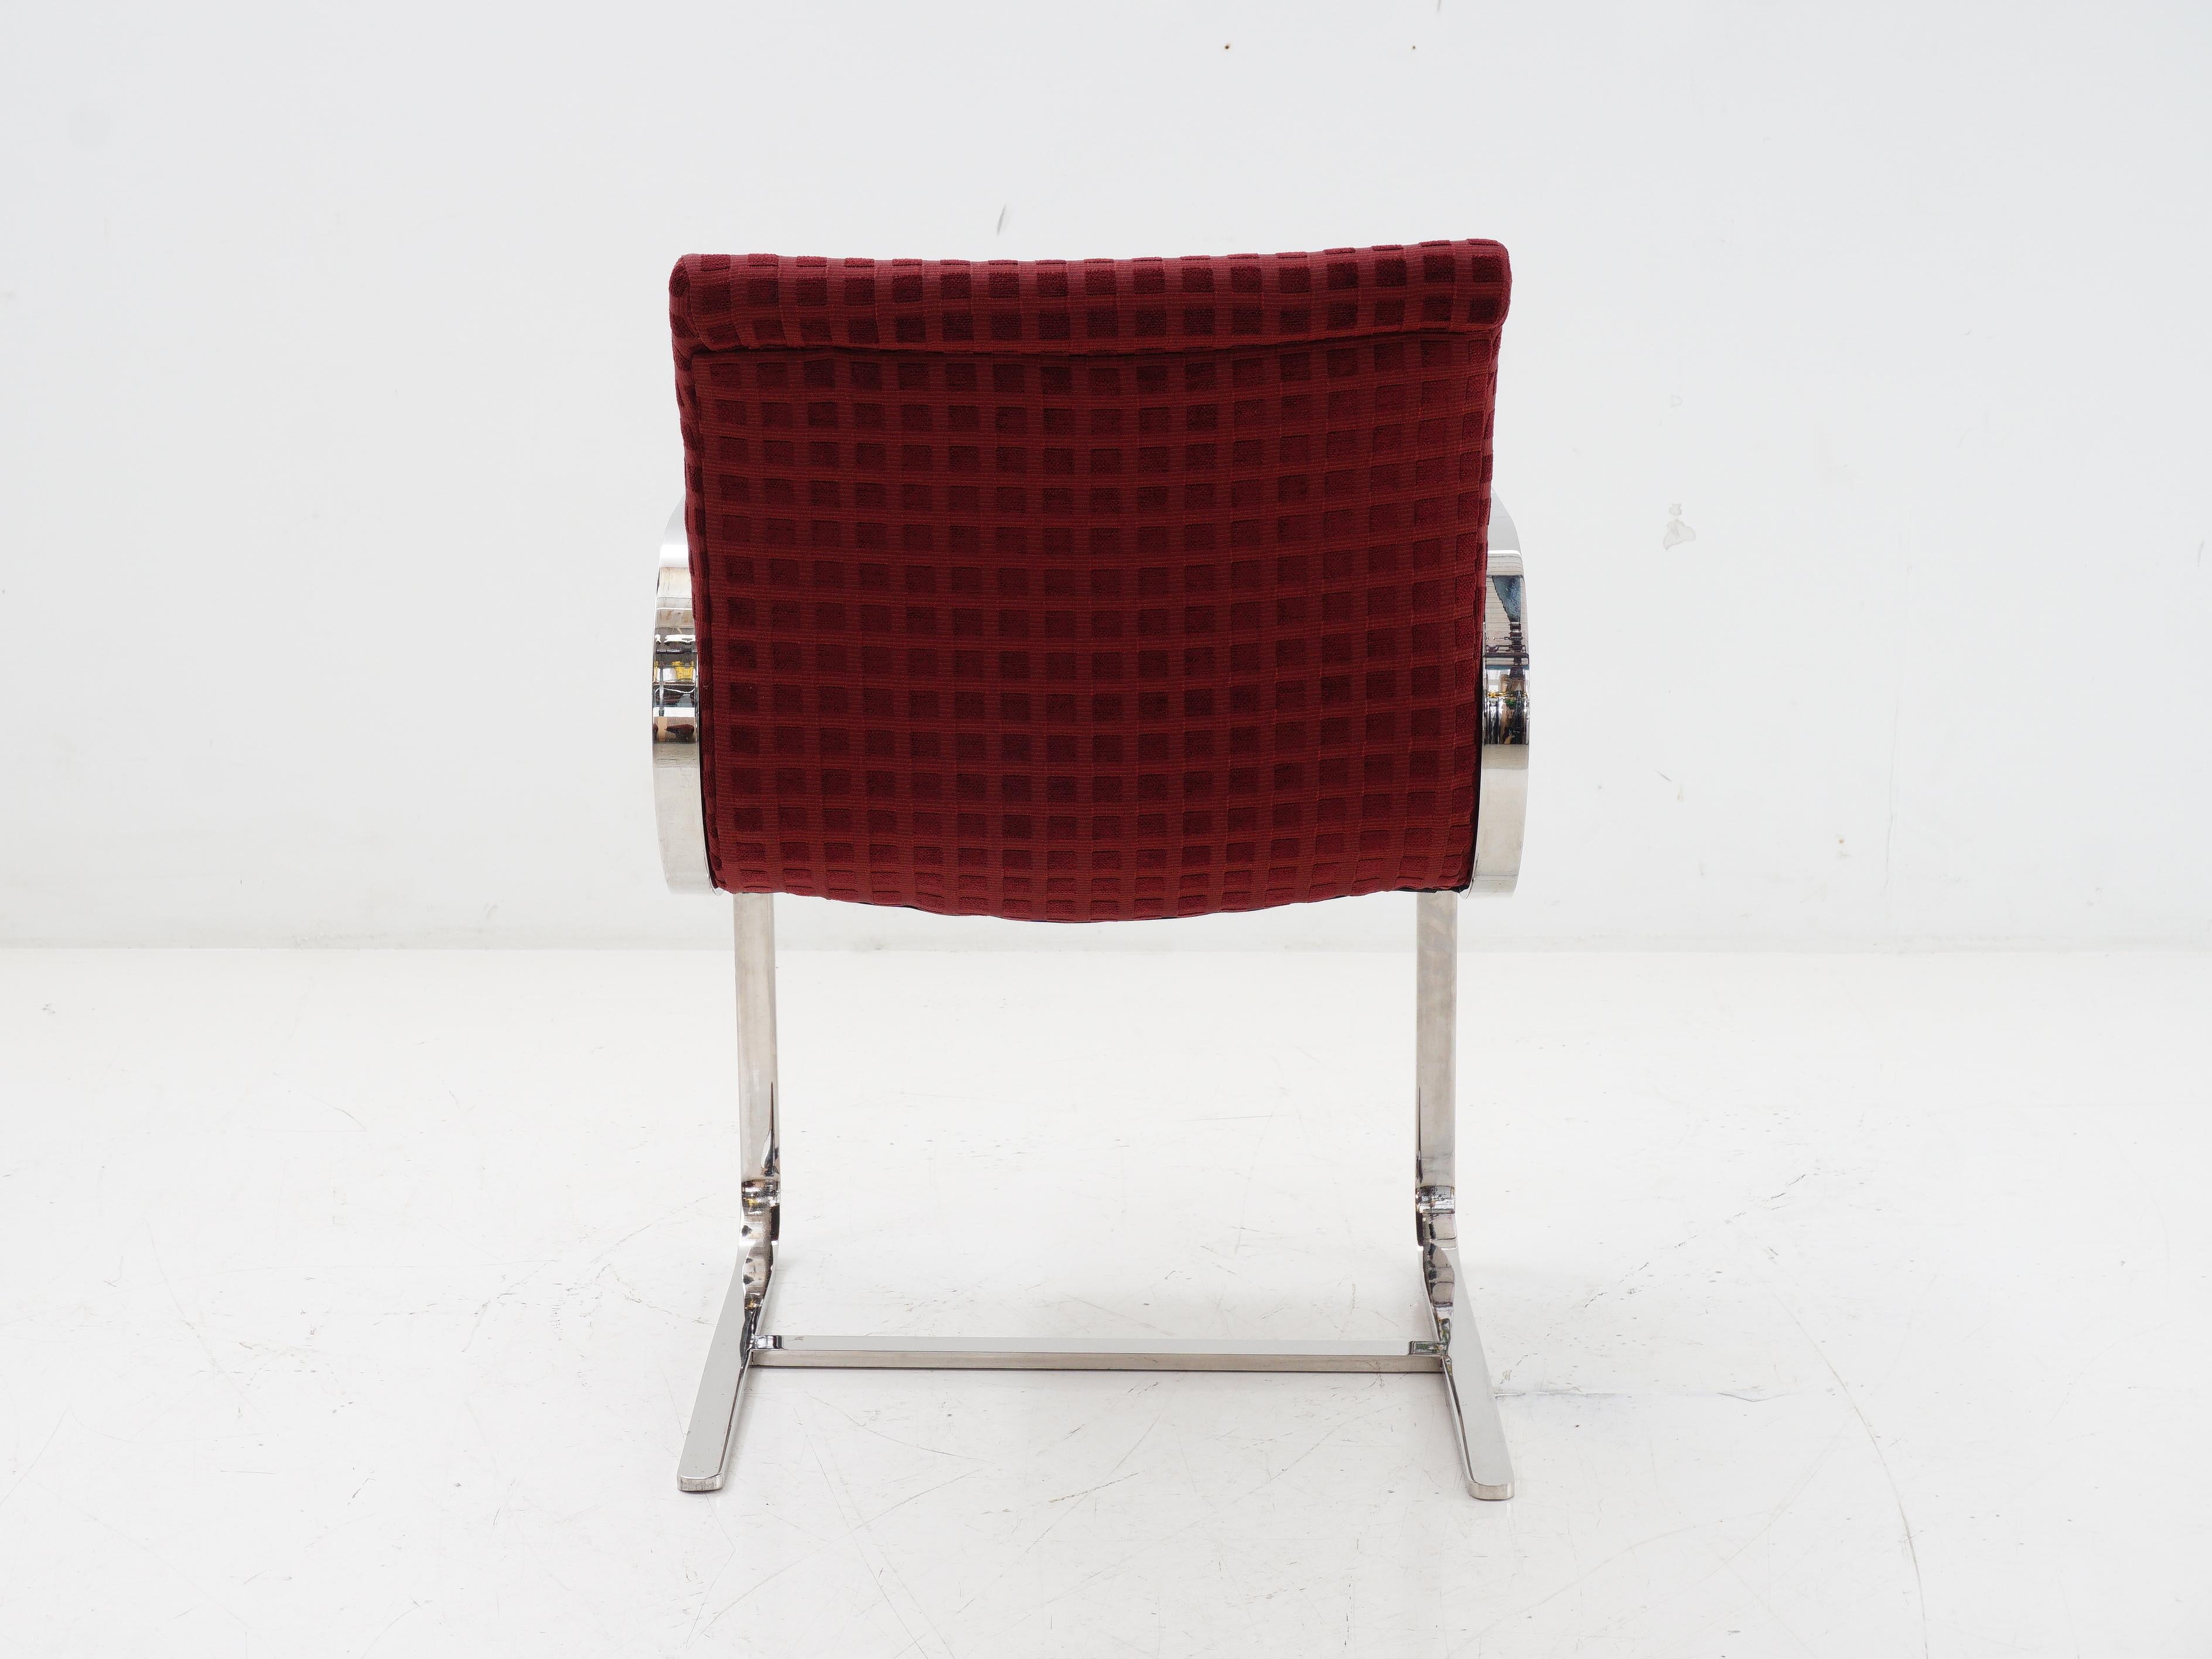 Freitragender Chrom-Flatbar-Stuhl, 1970er-Jahre (Bauhaus)